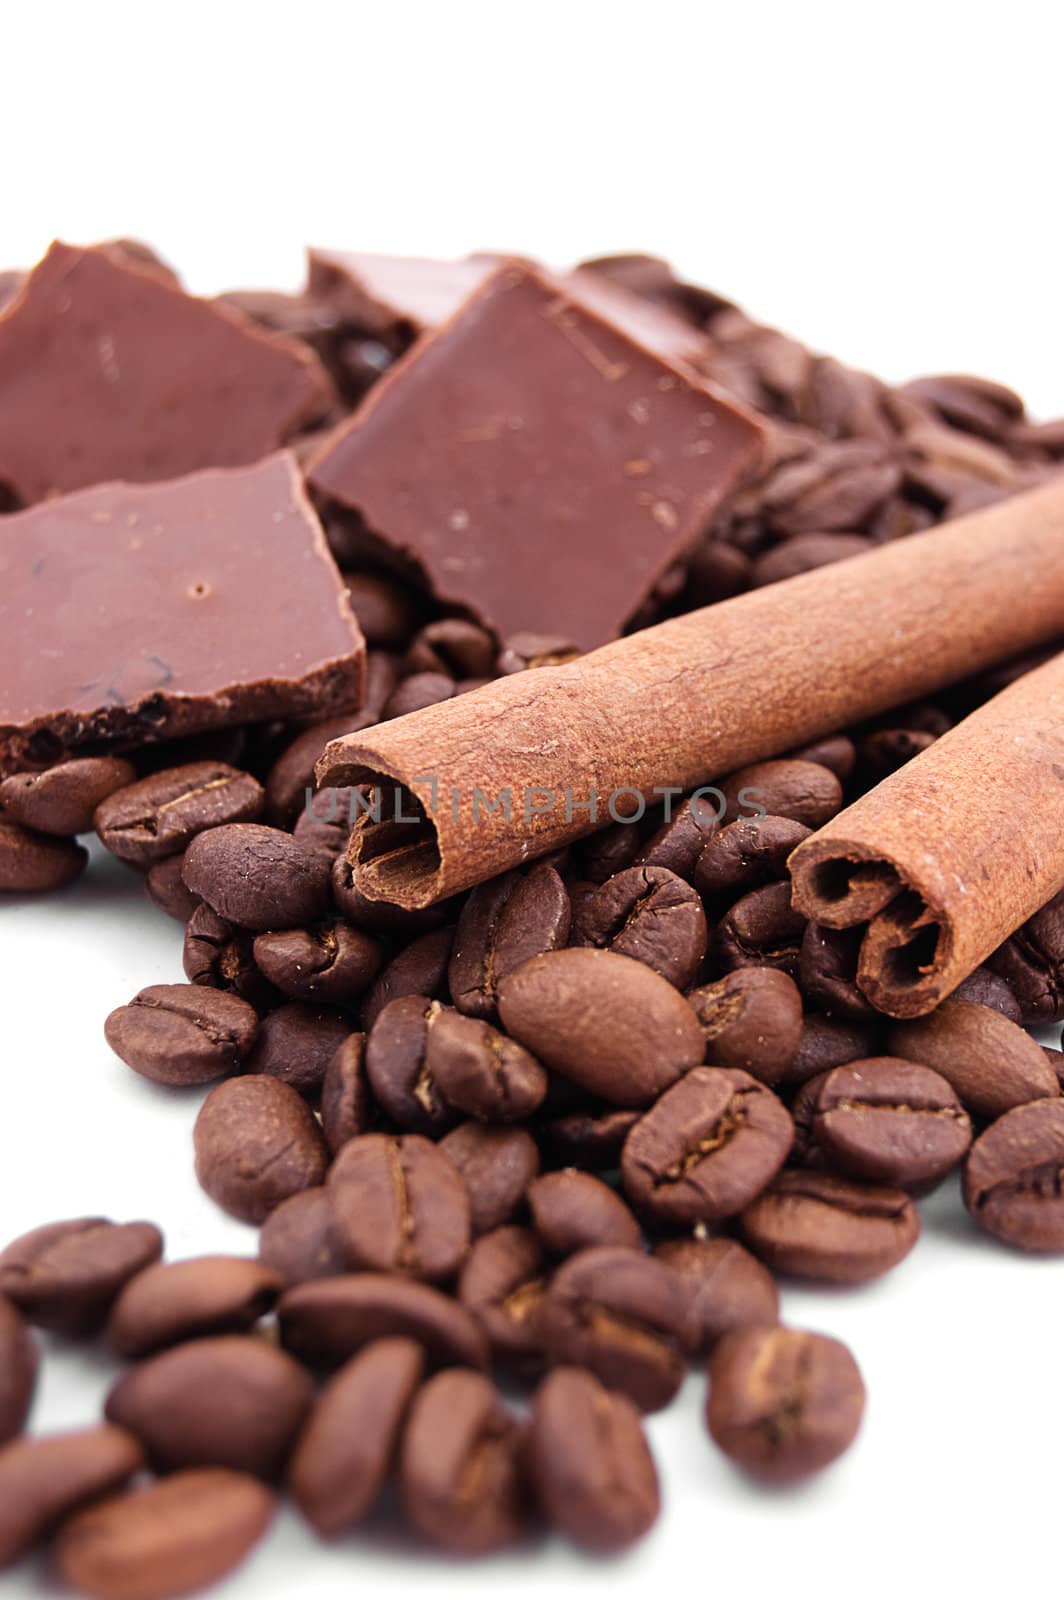 Cinnamon, coffee and chocolate by Angel_a